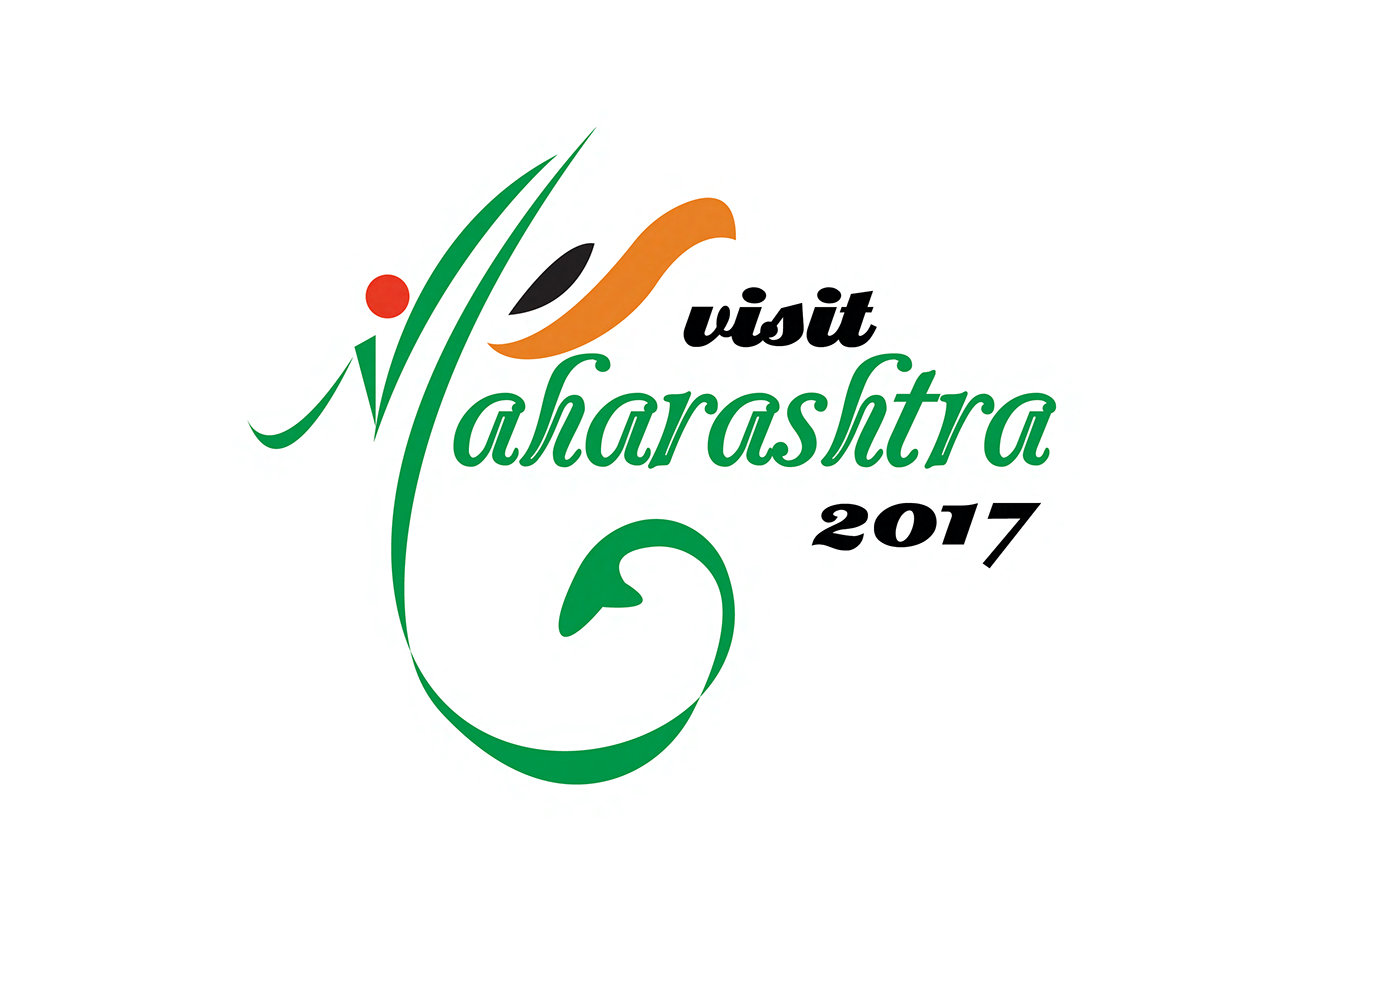 maharashtra tourism brand ambassador